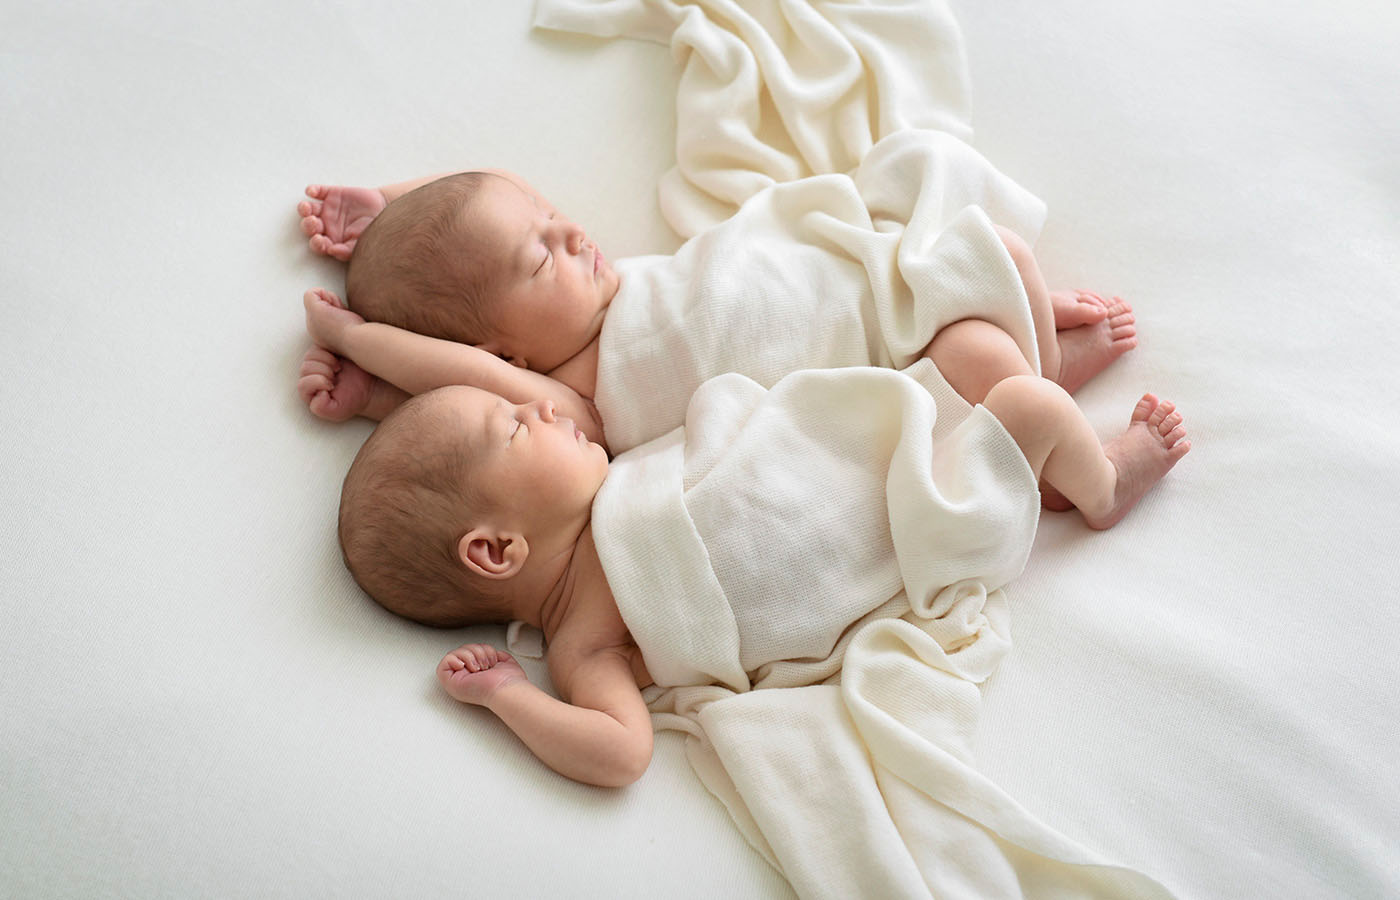 A photograph of twins lying asleep under a blanket taken by Jessica Loren in her studio in Brisbane.